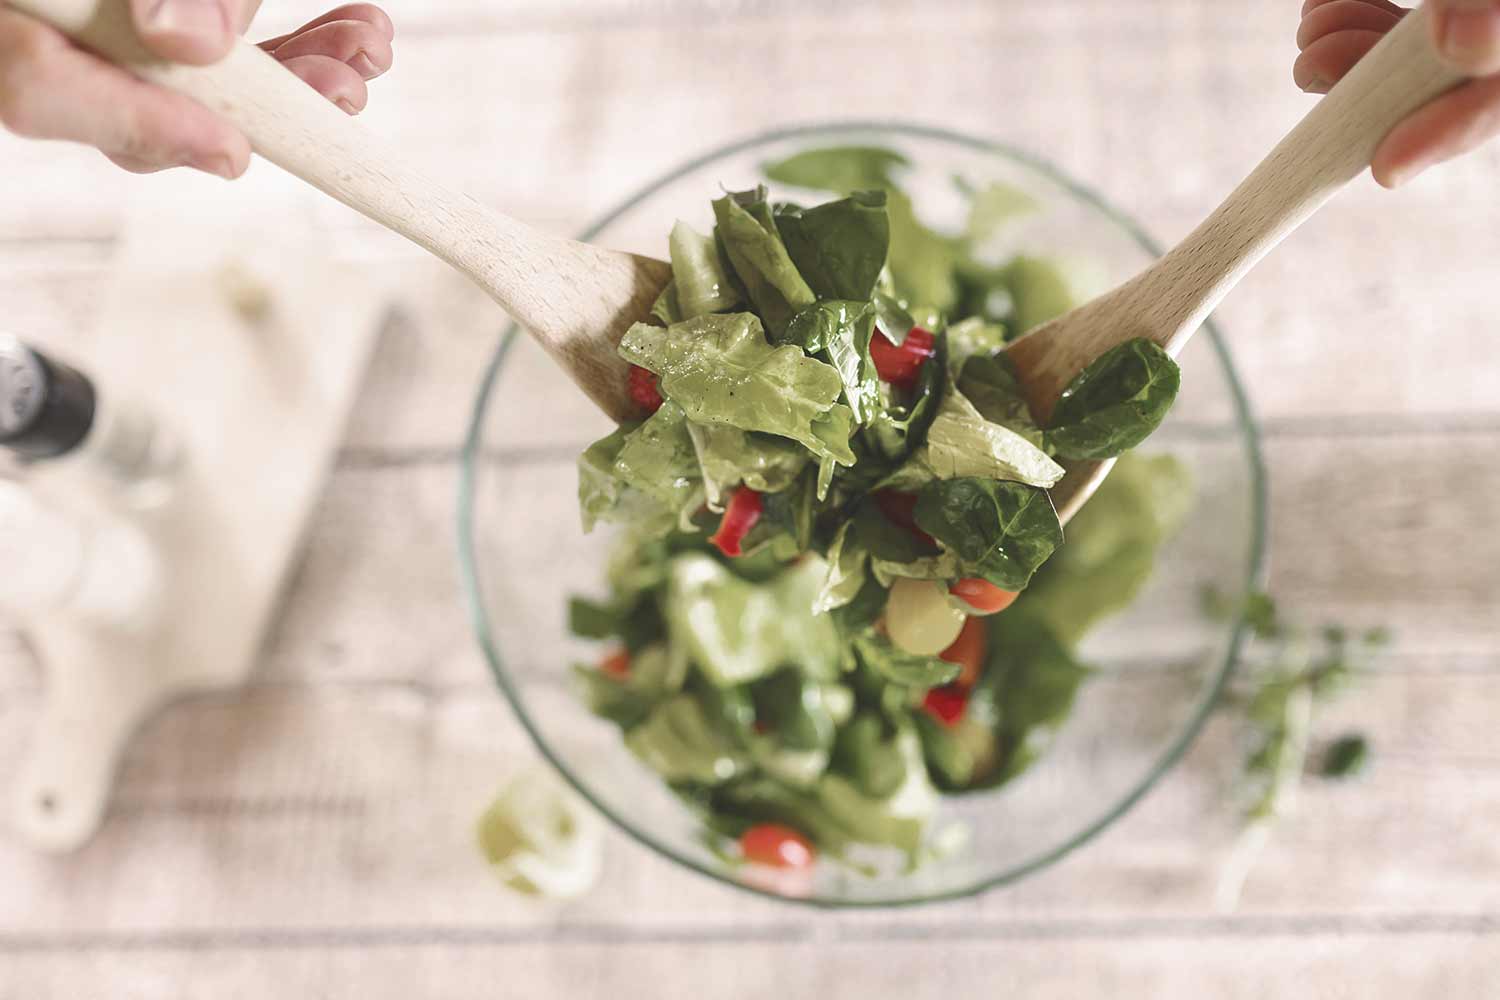 Healthy eats near PHO for your Spartan Race Training - Craft Salad